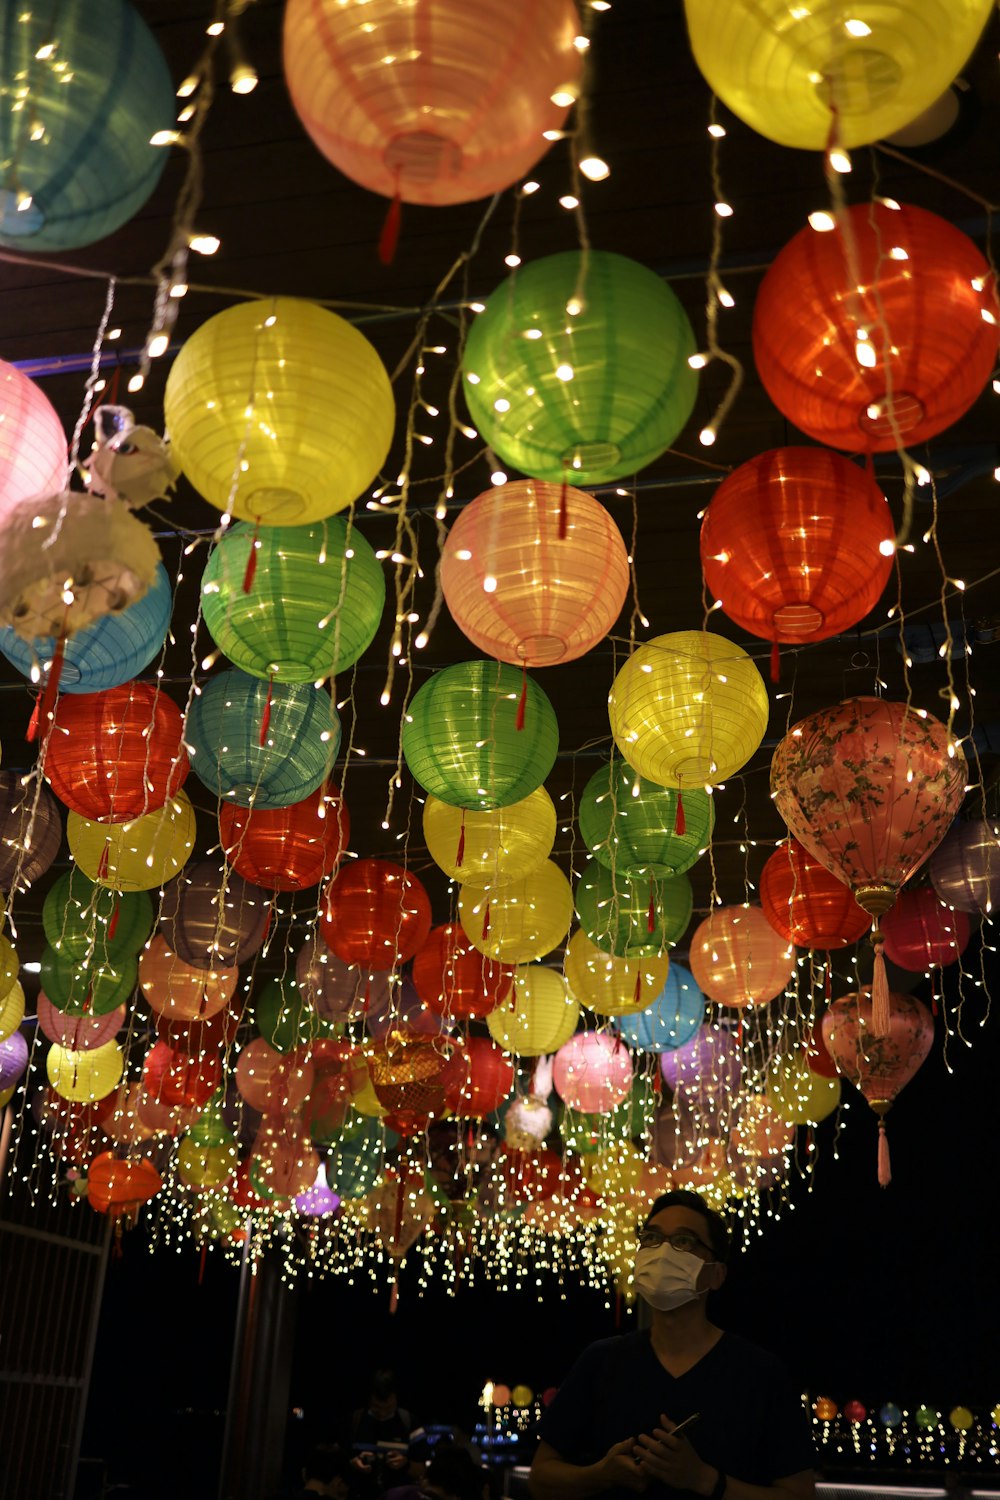 Una stanza piena di un sacco di lanterne di carta colorate foto – Hong Kong  Immagine gratuita su Unsplash